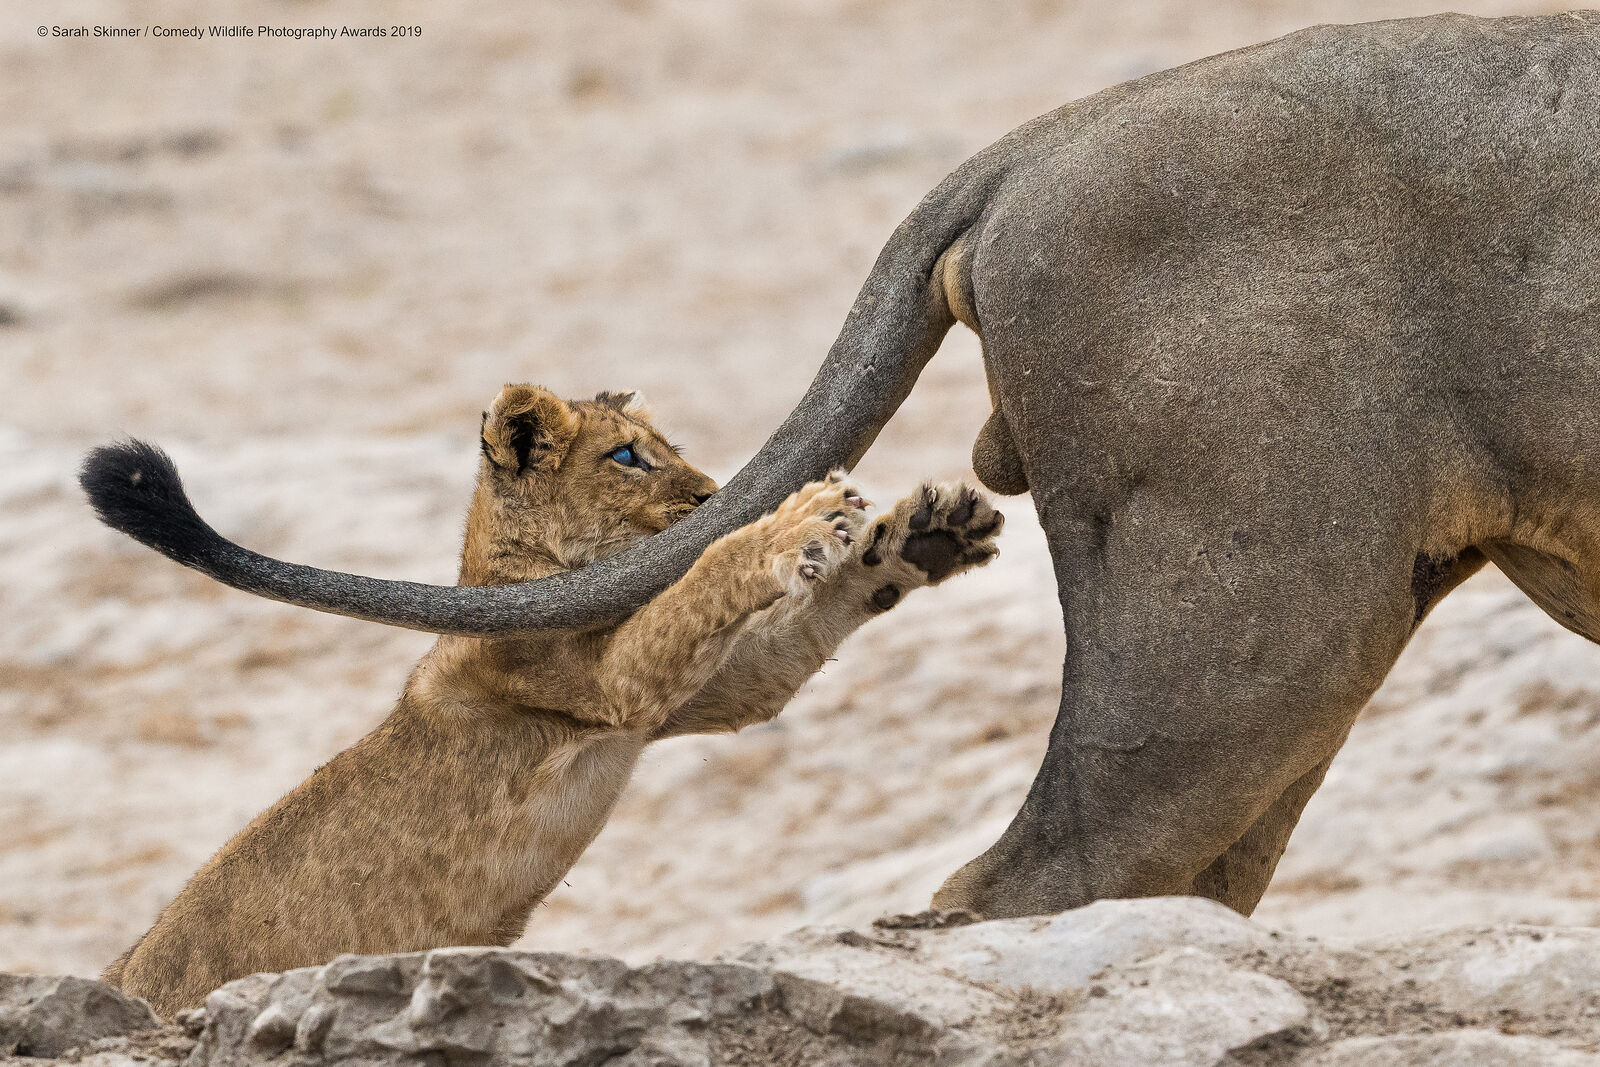 "Хватай жизнь за .....". Фото: Sarah Skinner / Comedy Wildlife Photography